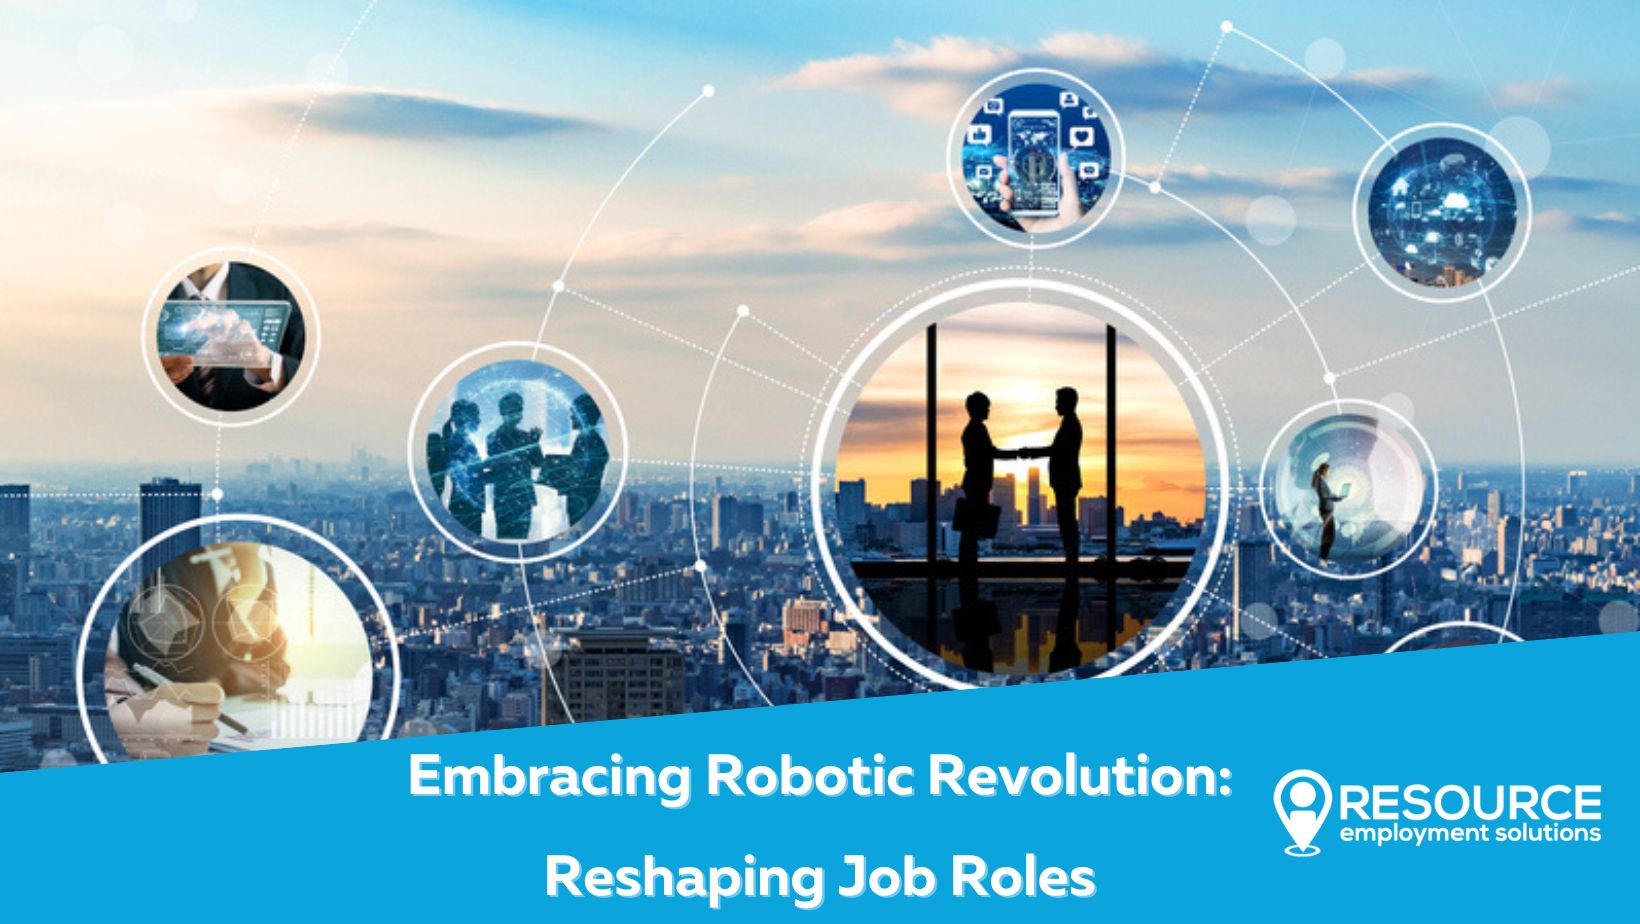 Embracing Robotic Revolution: Reshaping Job Roles